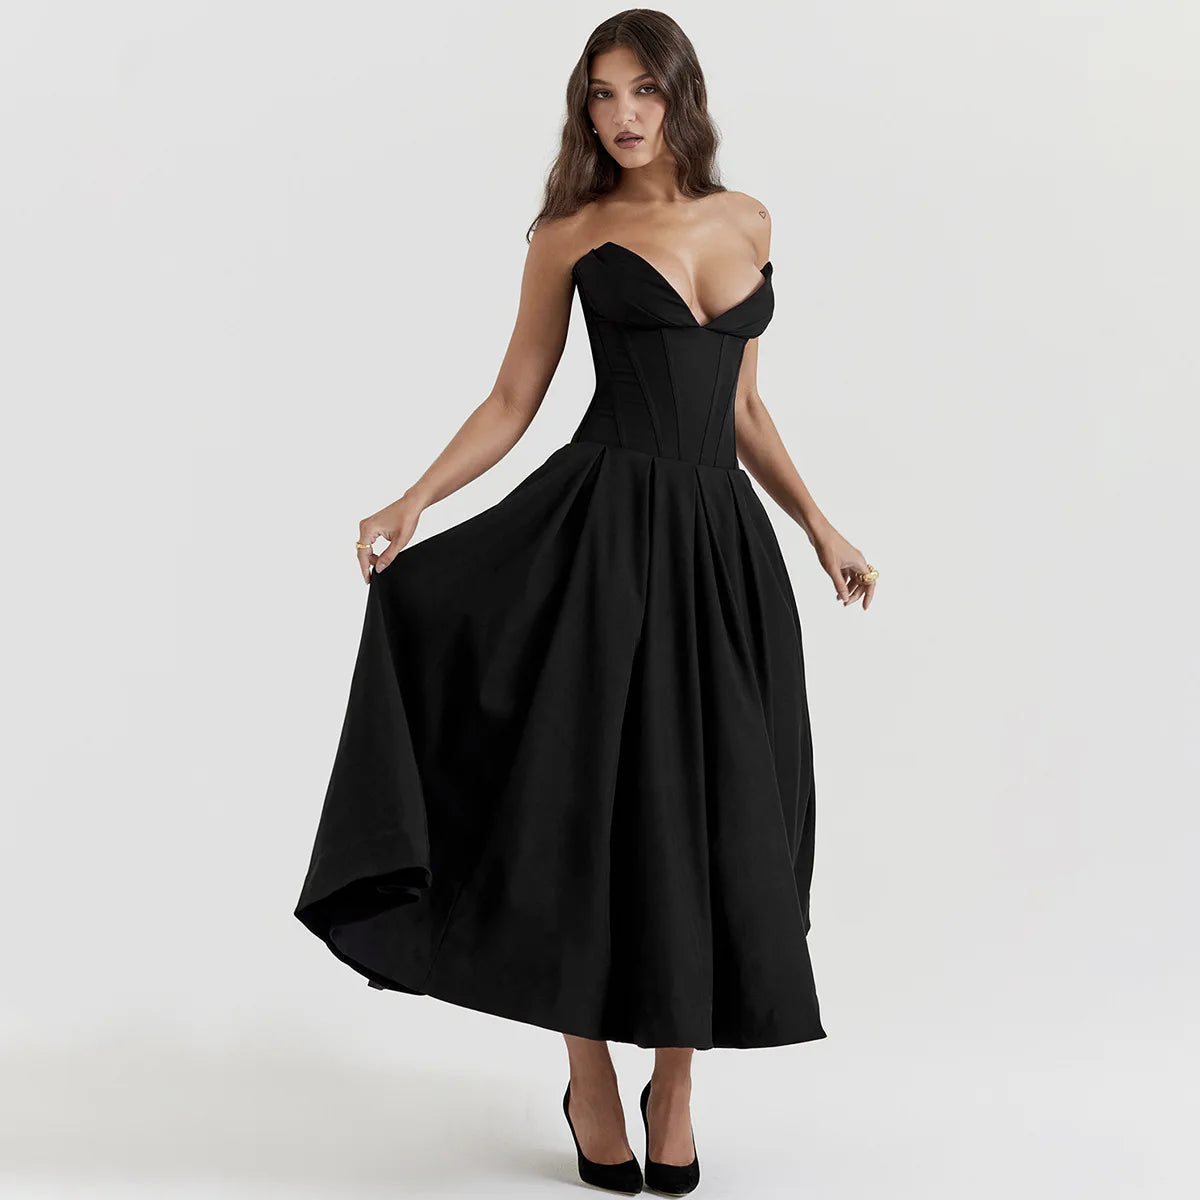 Strapless Corset Style Long Dresses